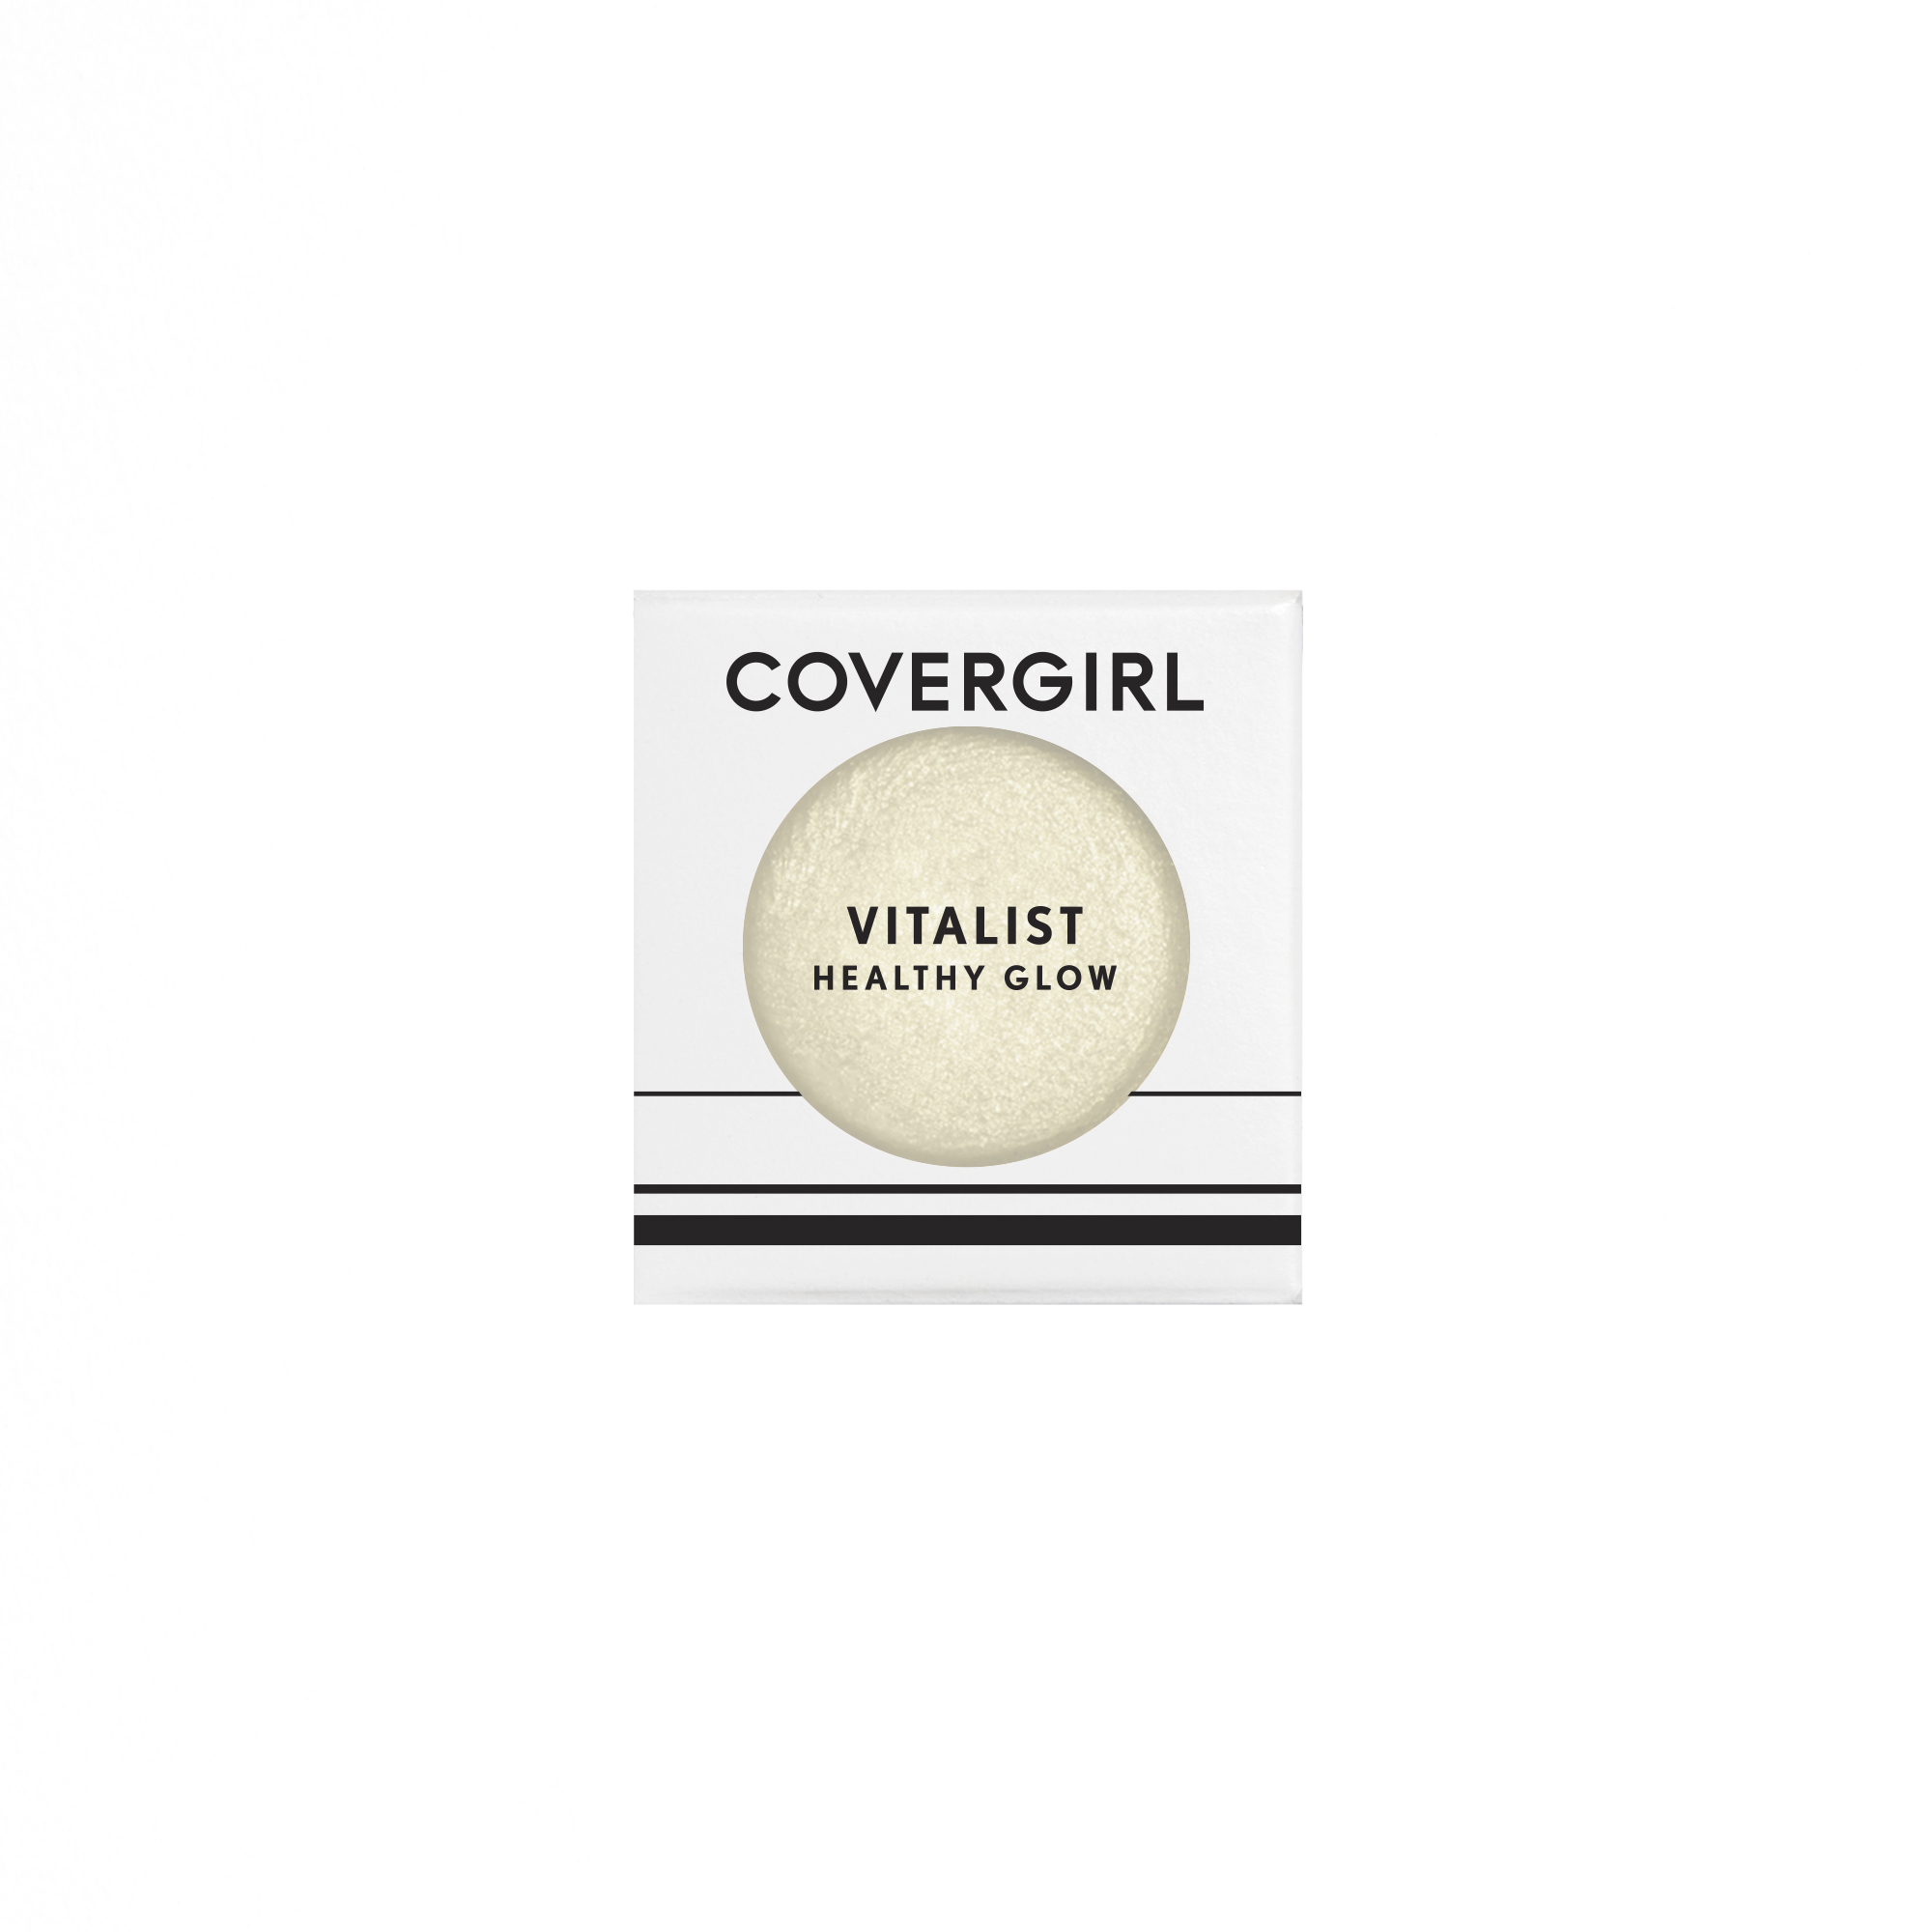 COVERGIRL Vitalist Healthy Glow Highlighter, Starshine, 0.24 oz - image 2 of 4